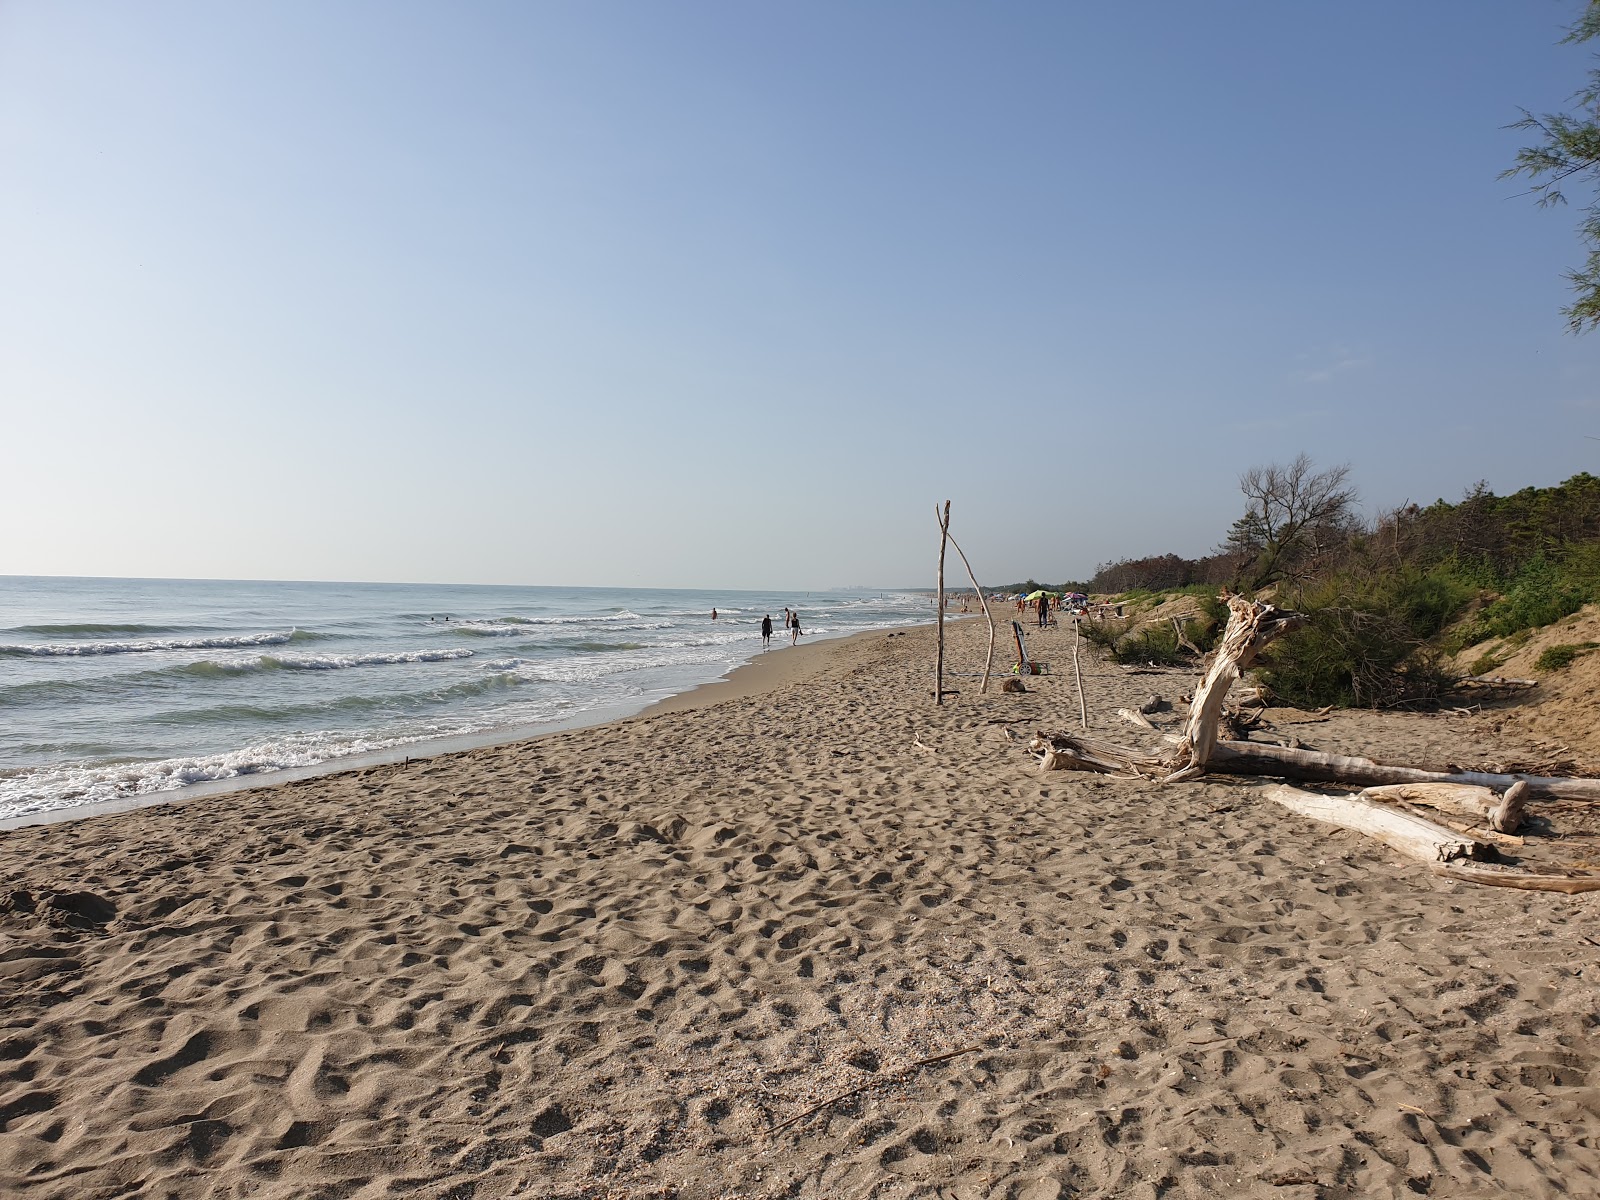 Foto av Spiaggia della Bassona med ljus sand yta